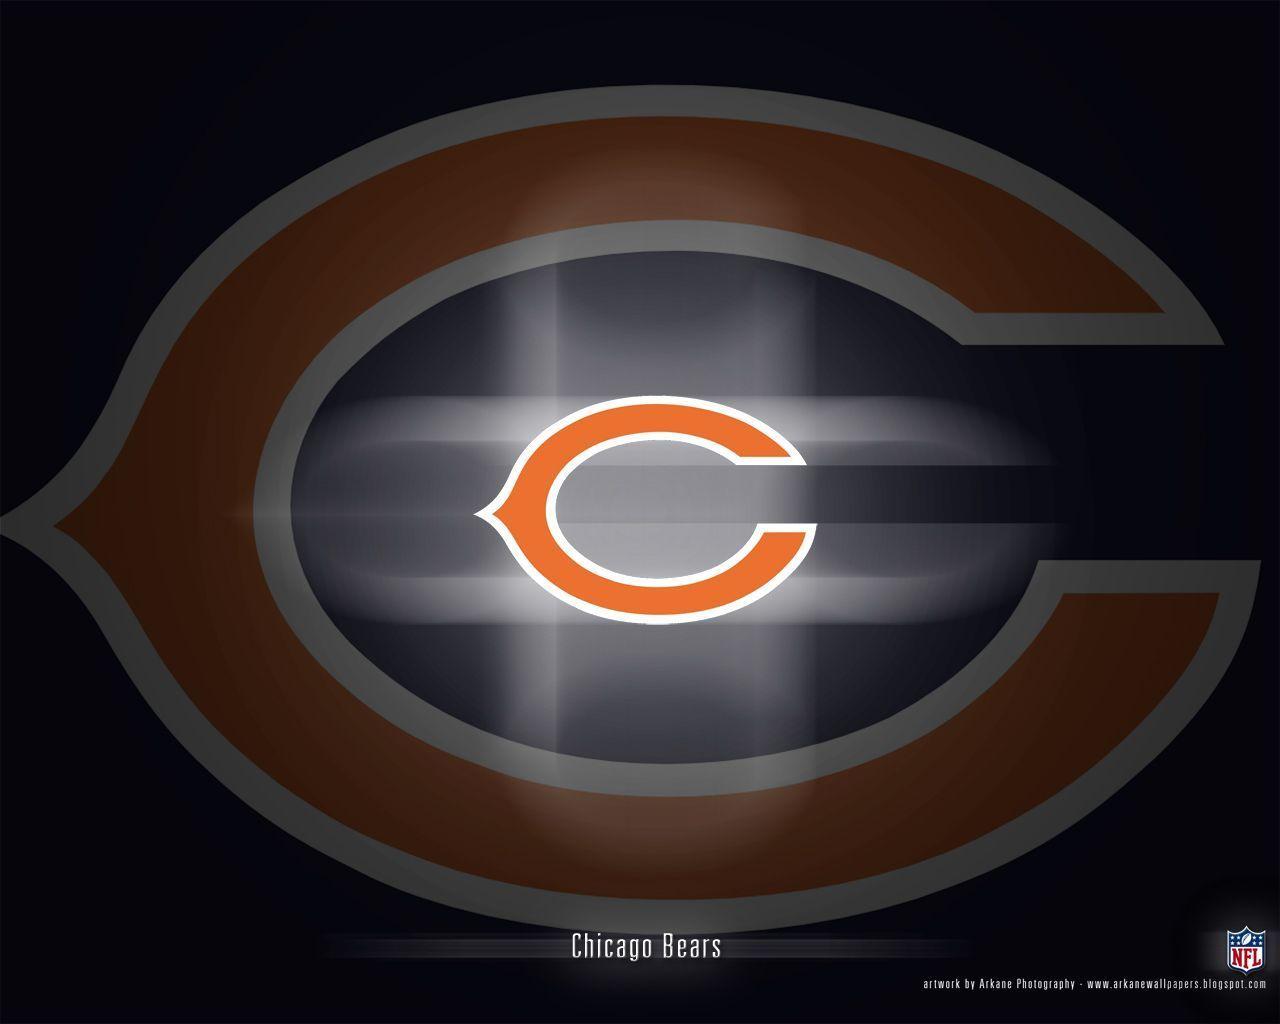 Chicago Bears wallpaper HD image. Chicago Bears wallpaper